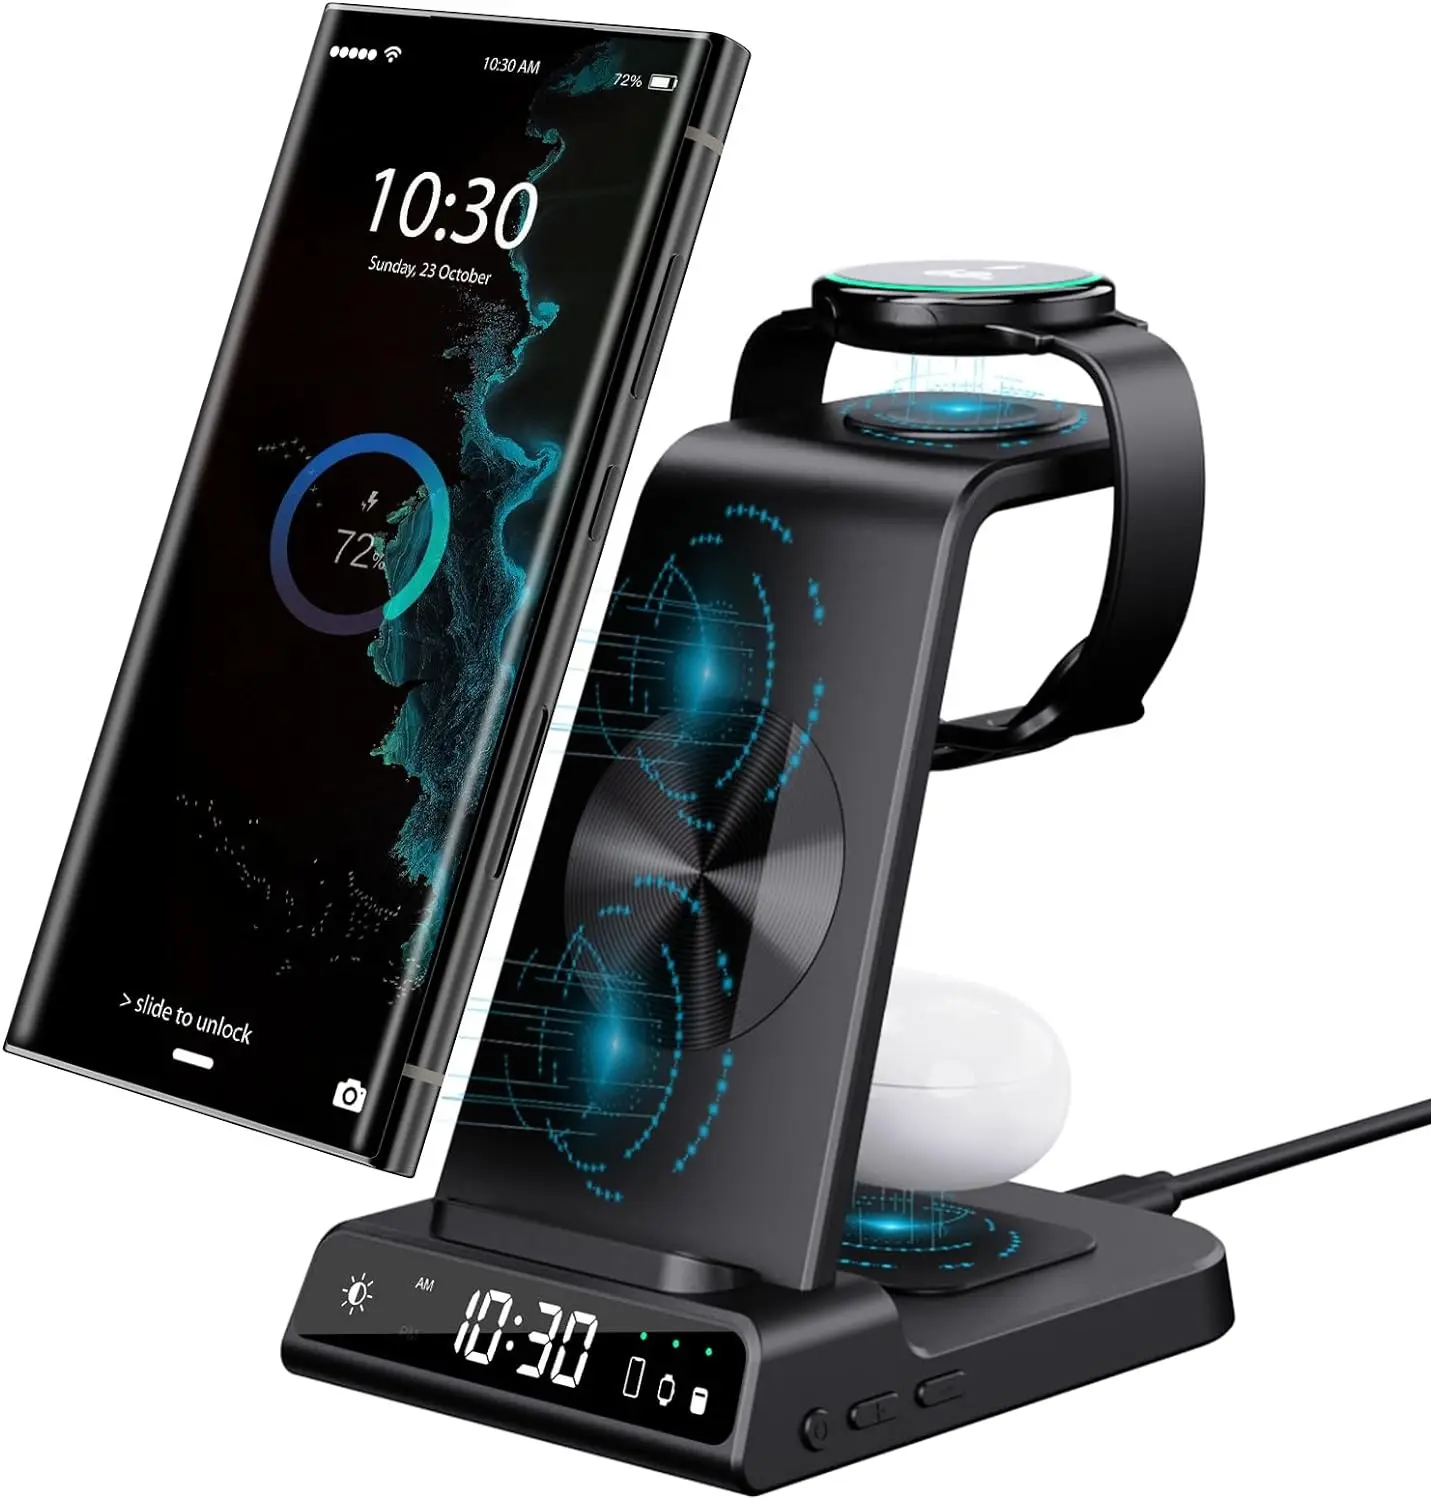 Alarm jam Dok Android 3 in 1, stasiun pengisian daya nirkabel, Alarm jam Dok Android untuk telepon dan jam dan earbud